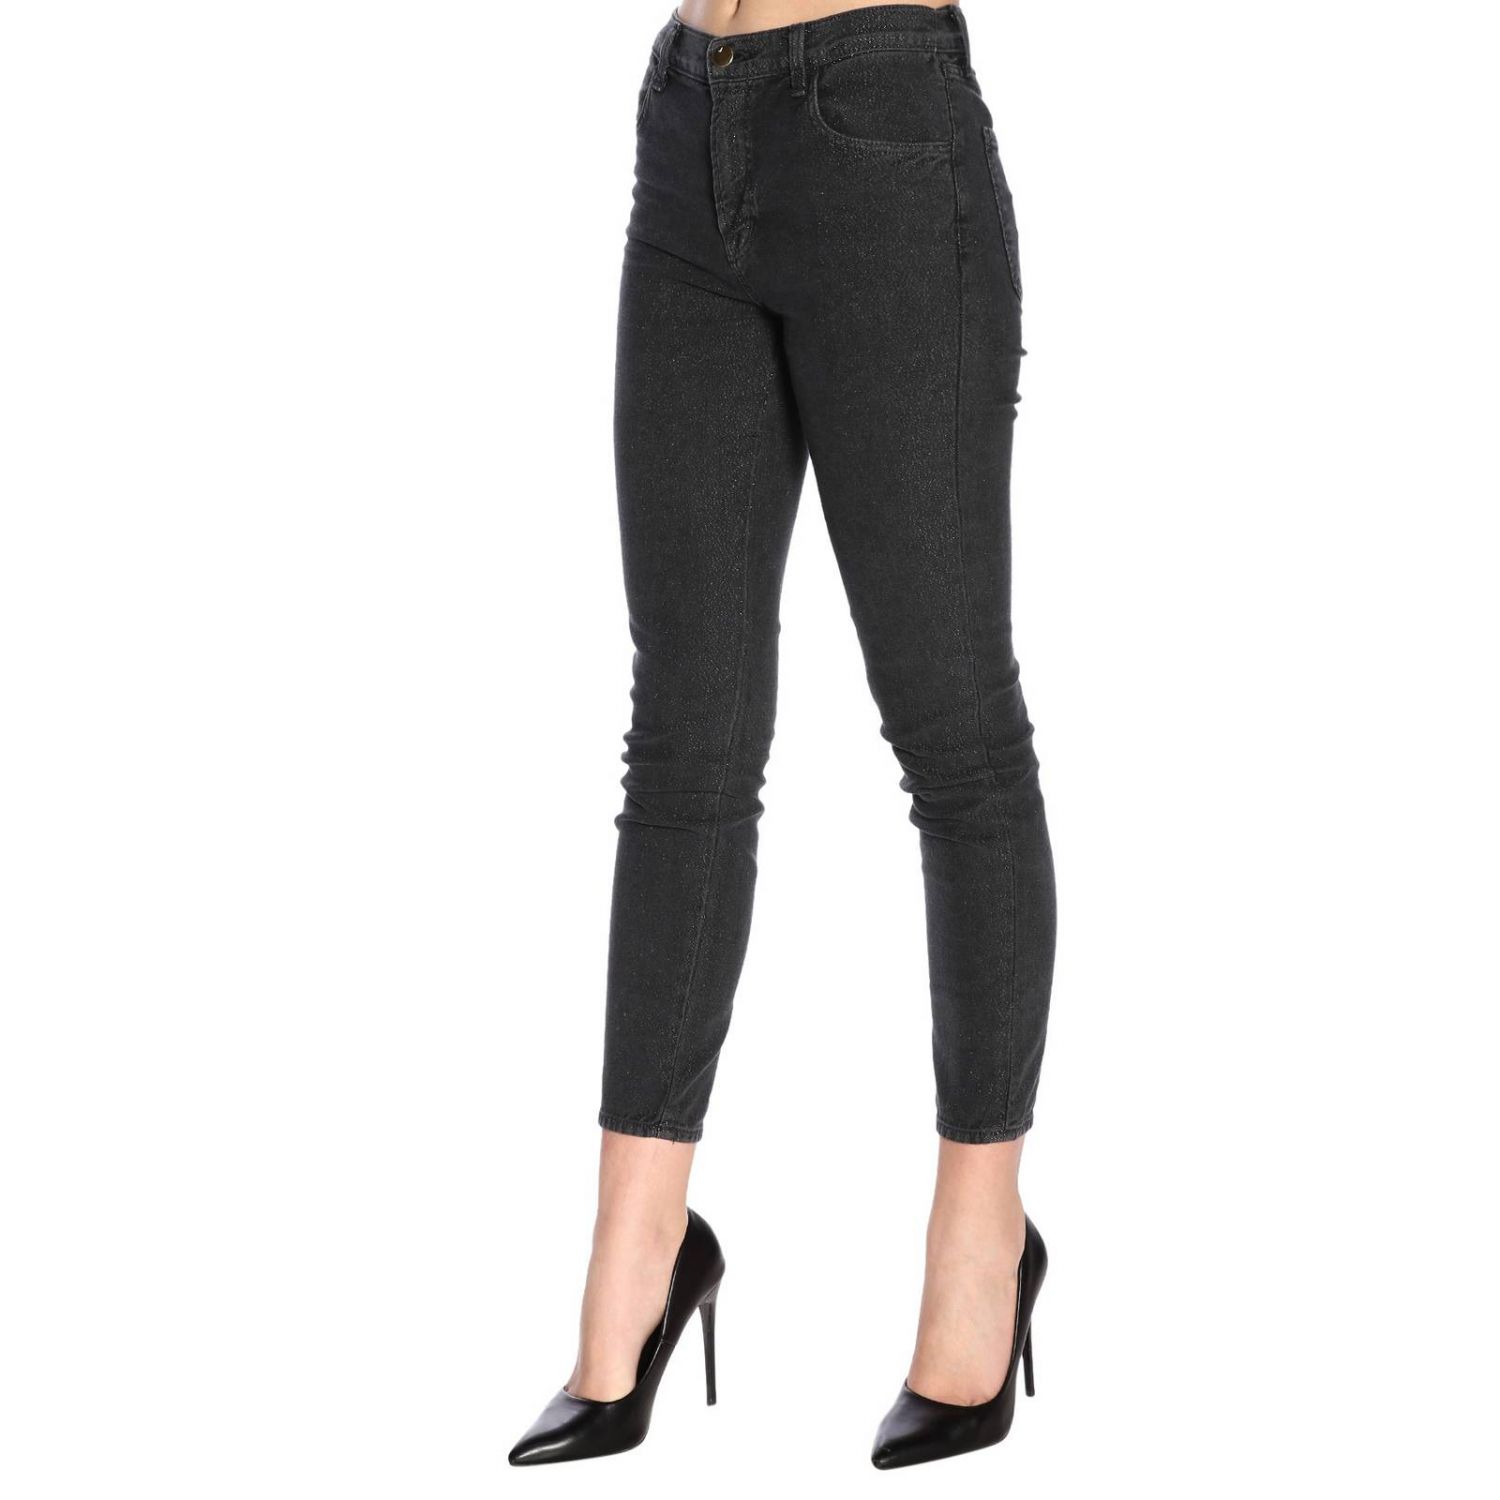 J Brand Outlet: Jeans woman - Black | J Brand Jeans JB001853 online at ...